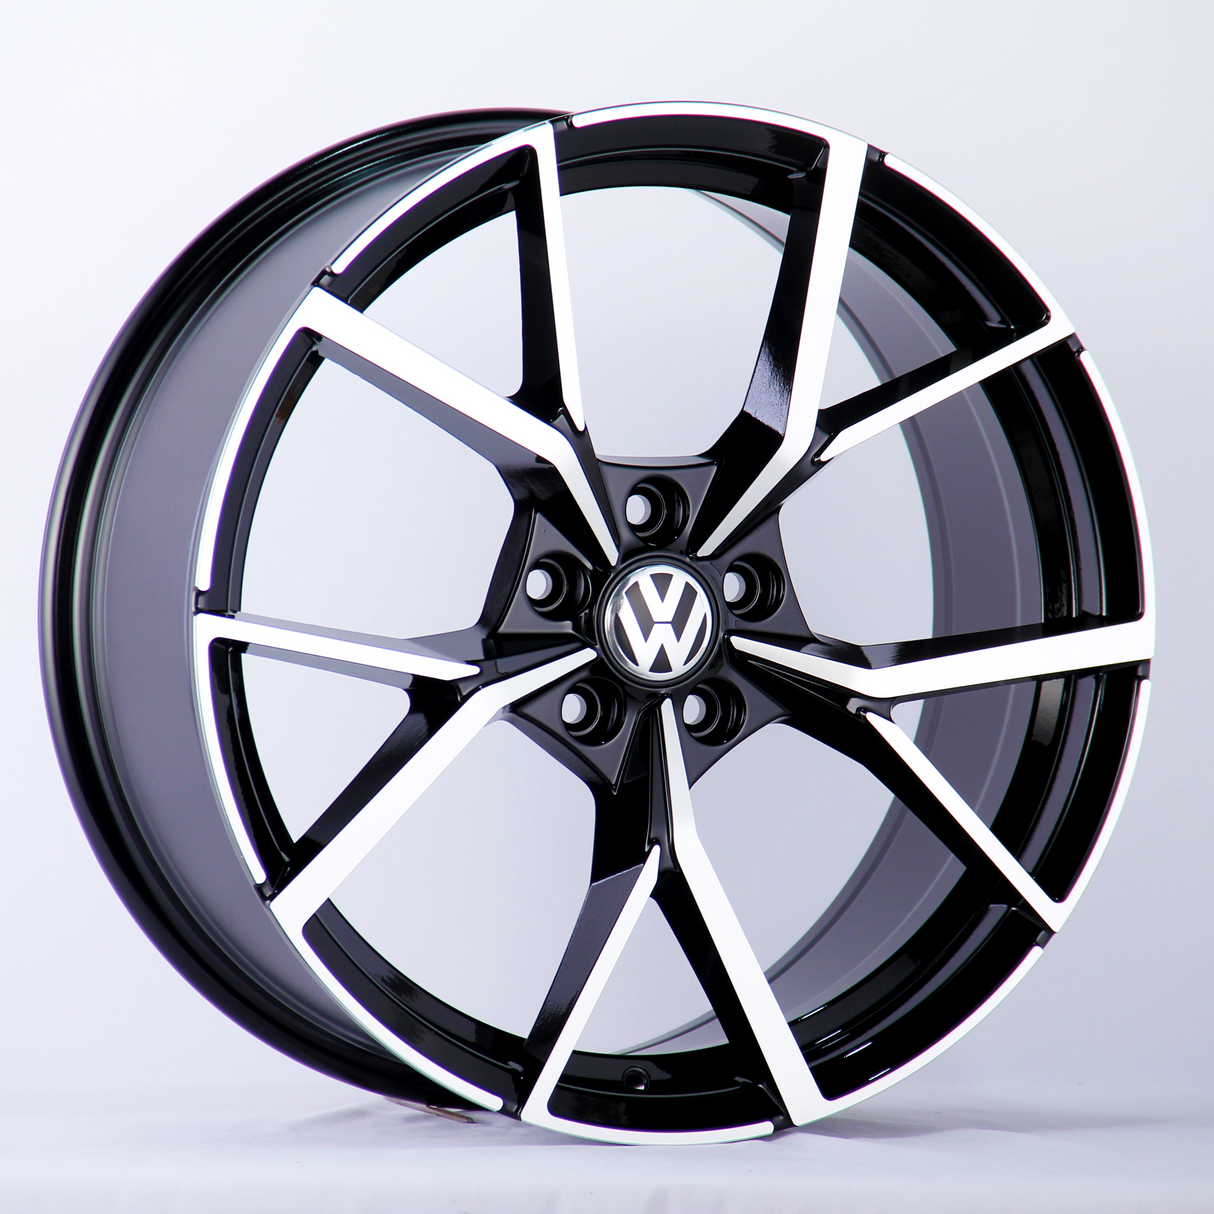 Arteon - MK1: 19" Diamond Cut R Style Alloy Wheels 20+